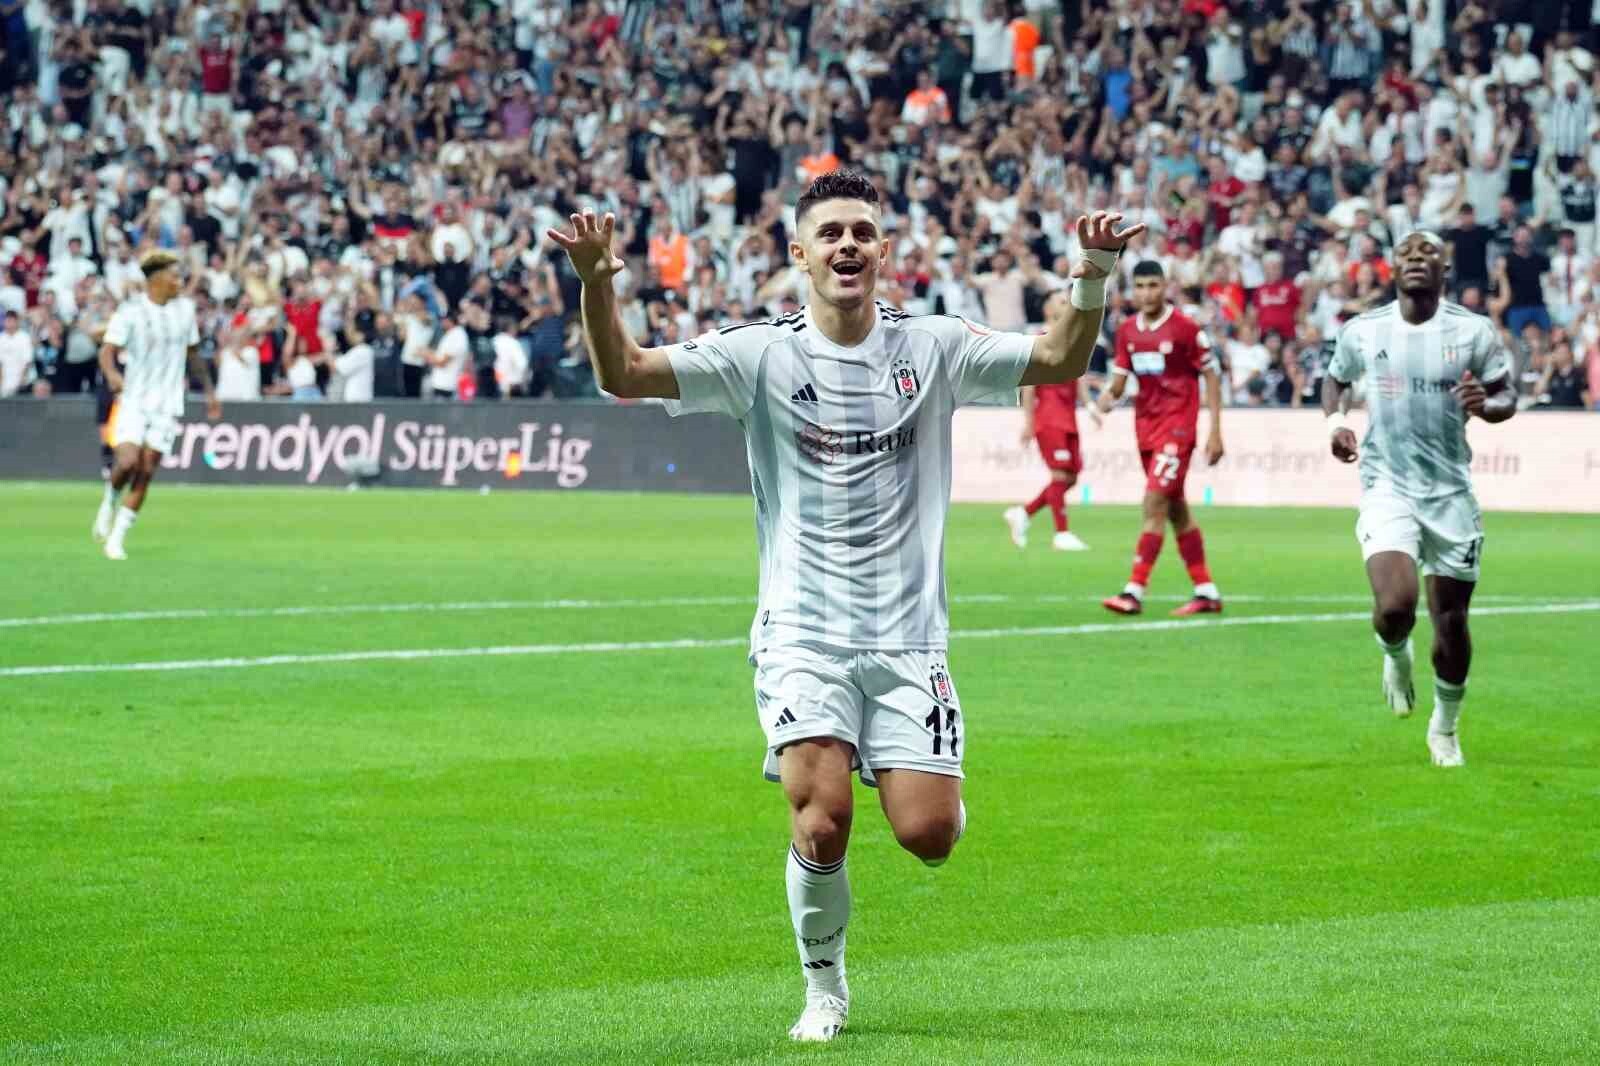 Beşiktaş:2 Gaziantep Bş. Bld.:1